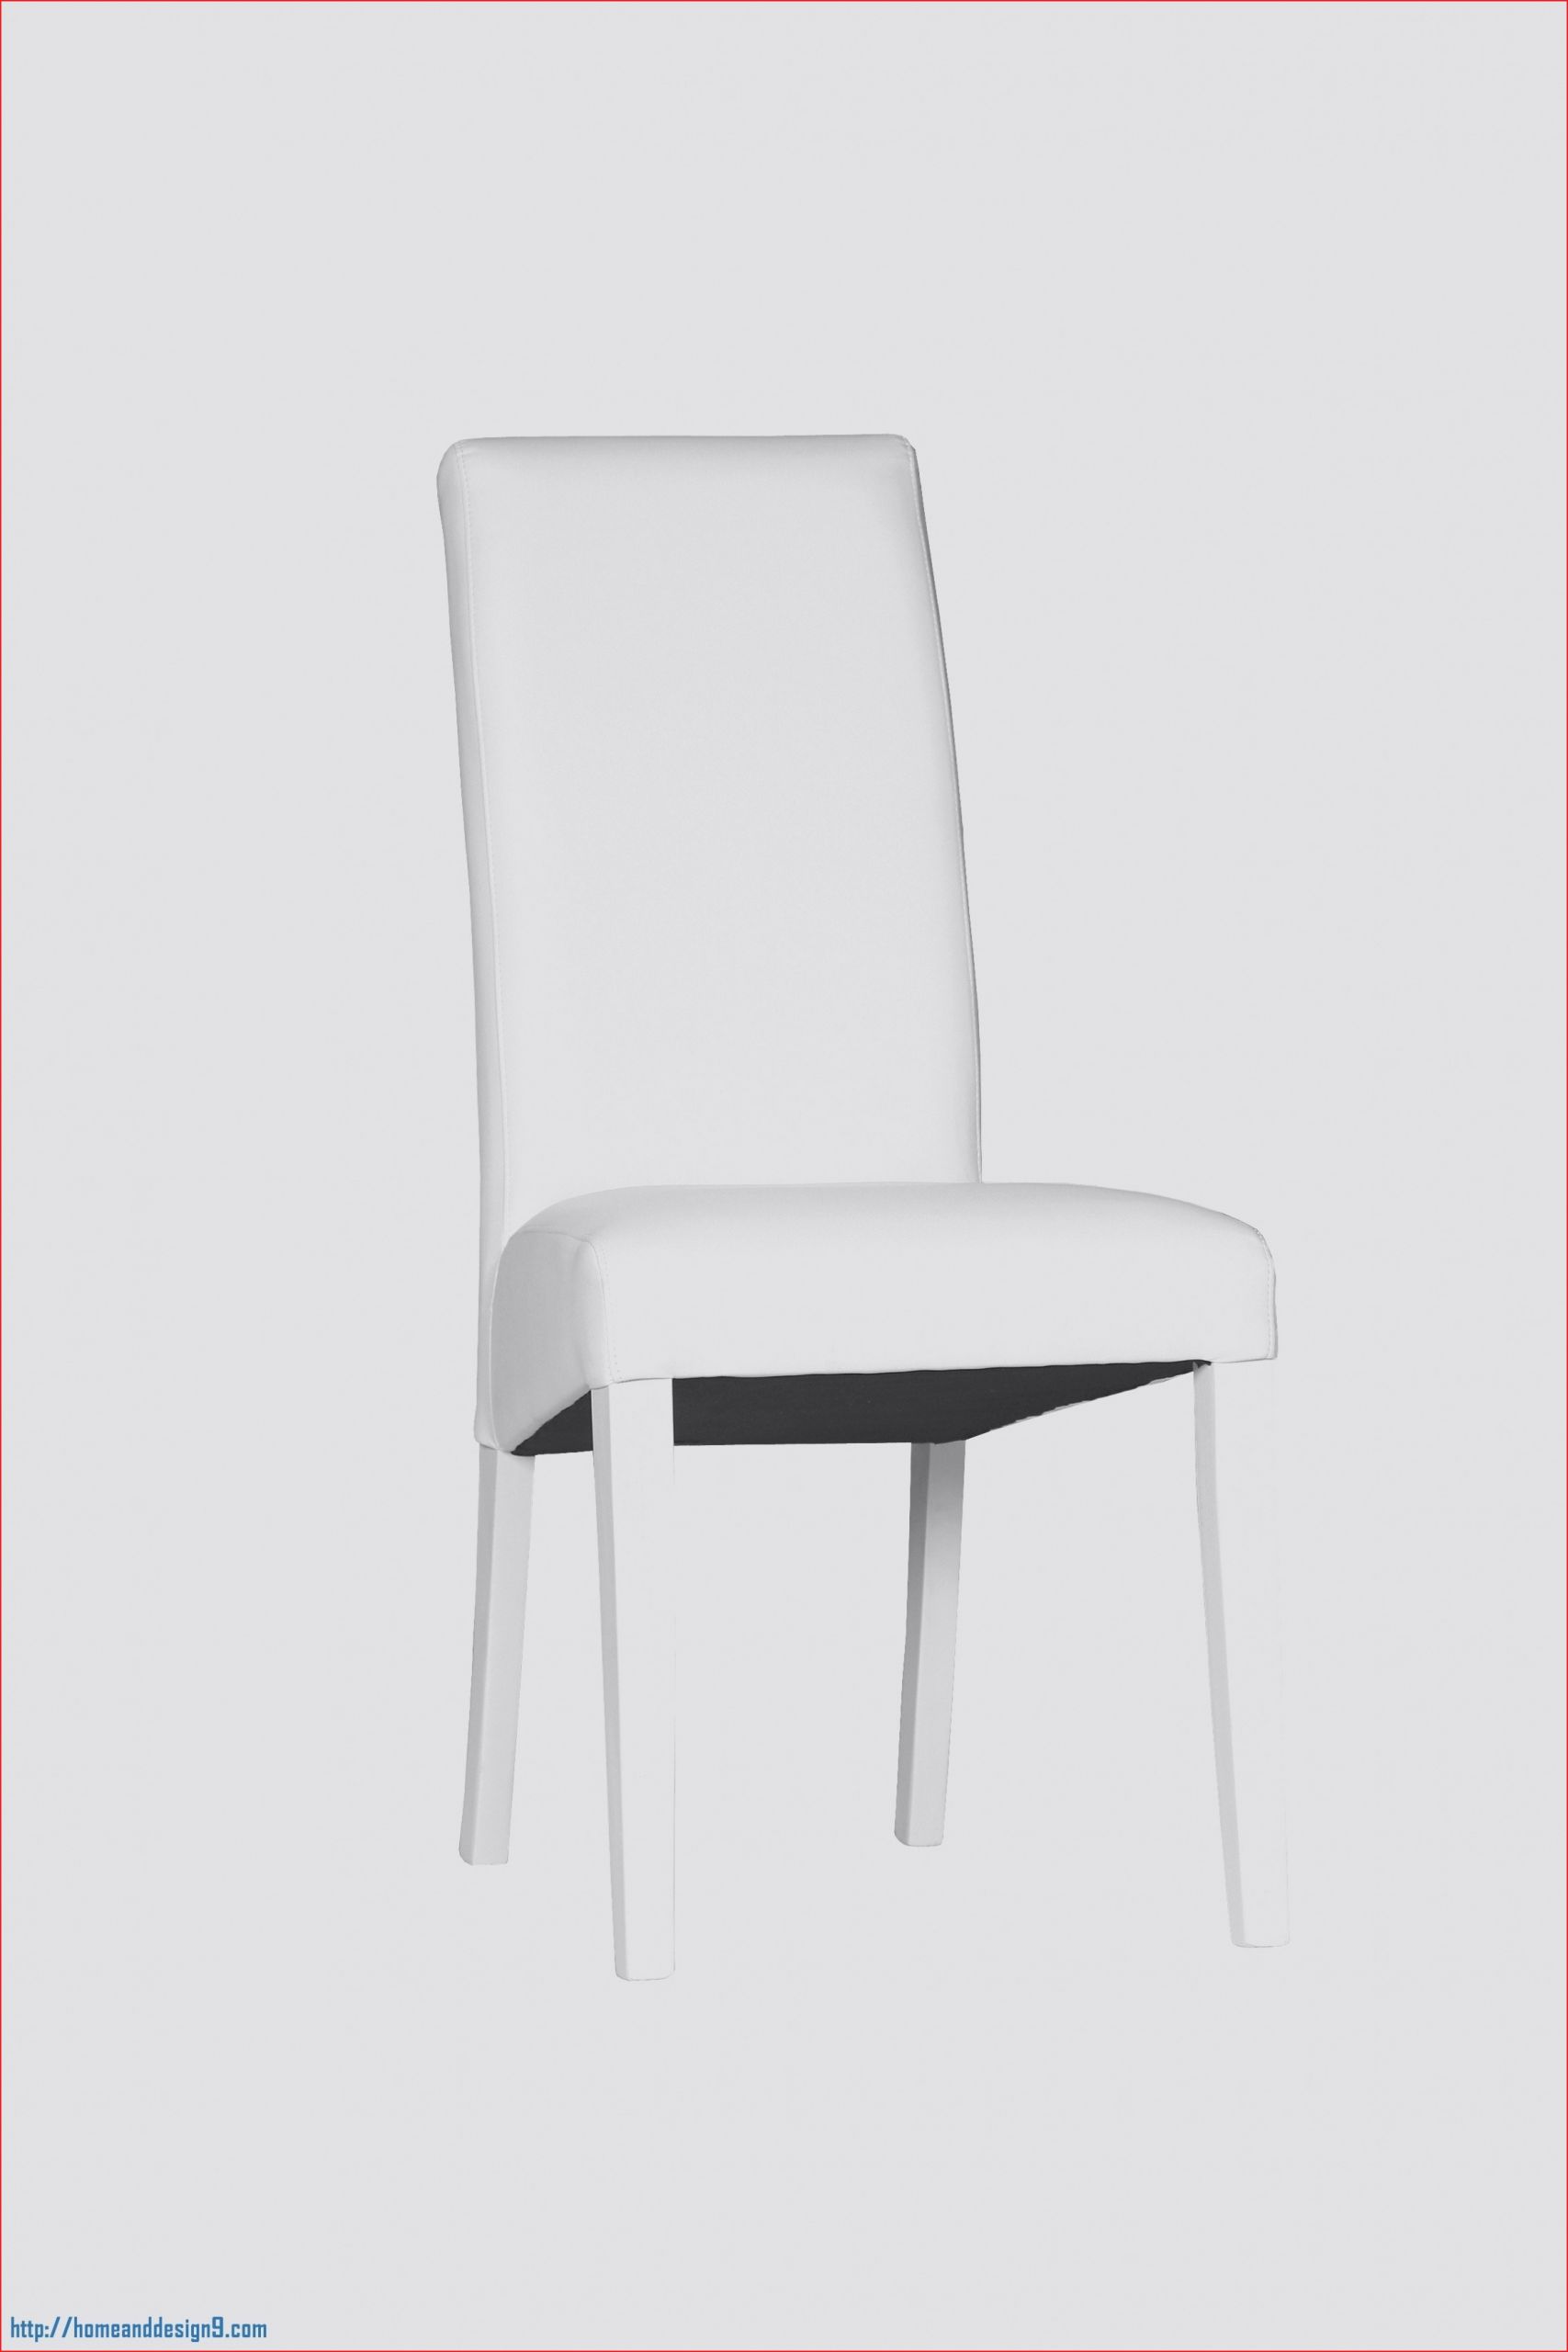 table et fauteuil de jardin genial genial chaise disign galerie de chaise idee 2019 de table et fauteuil de jardin scaled